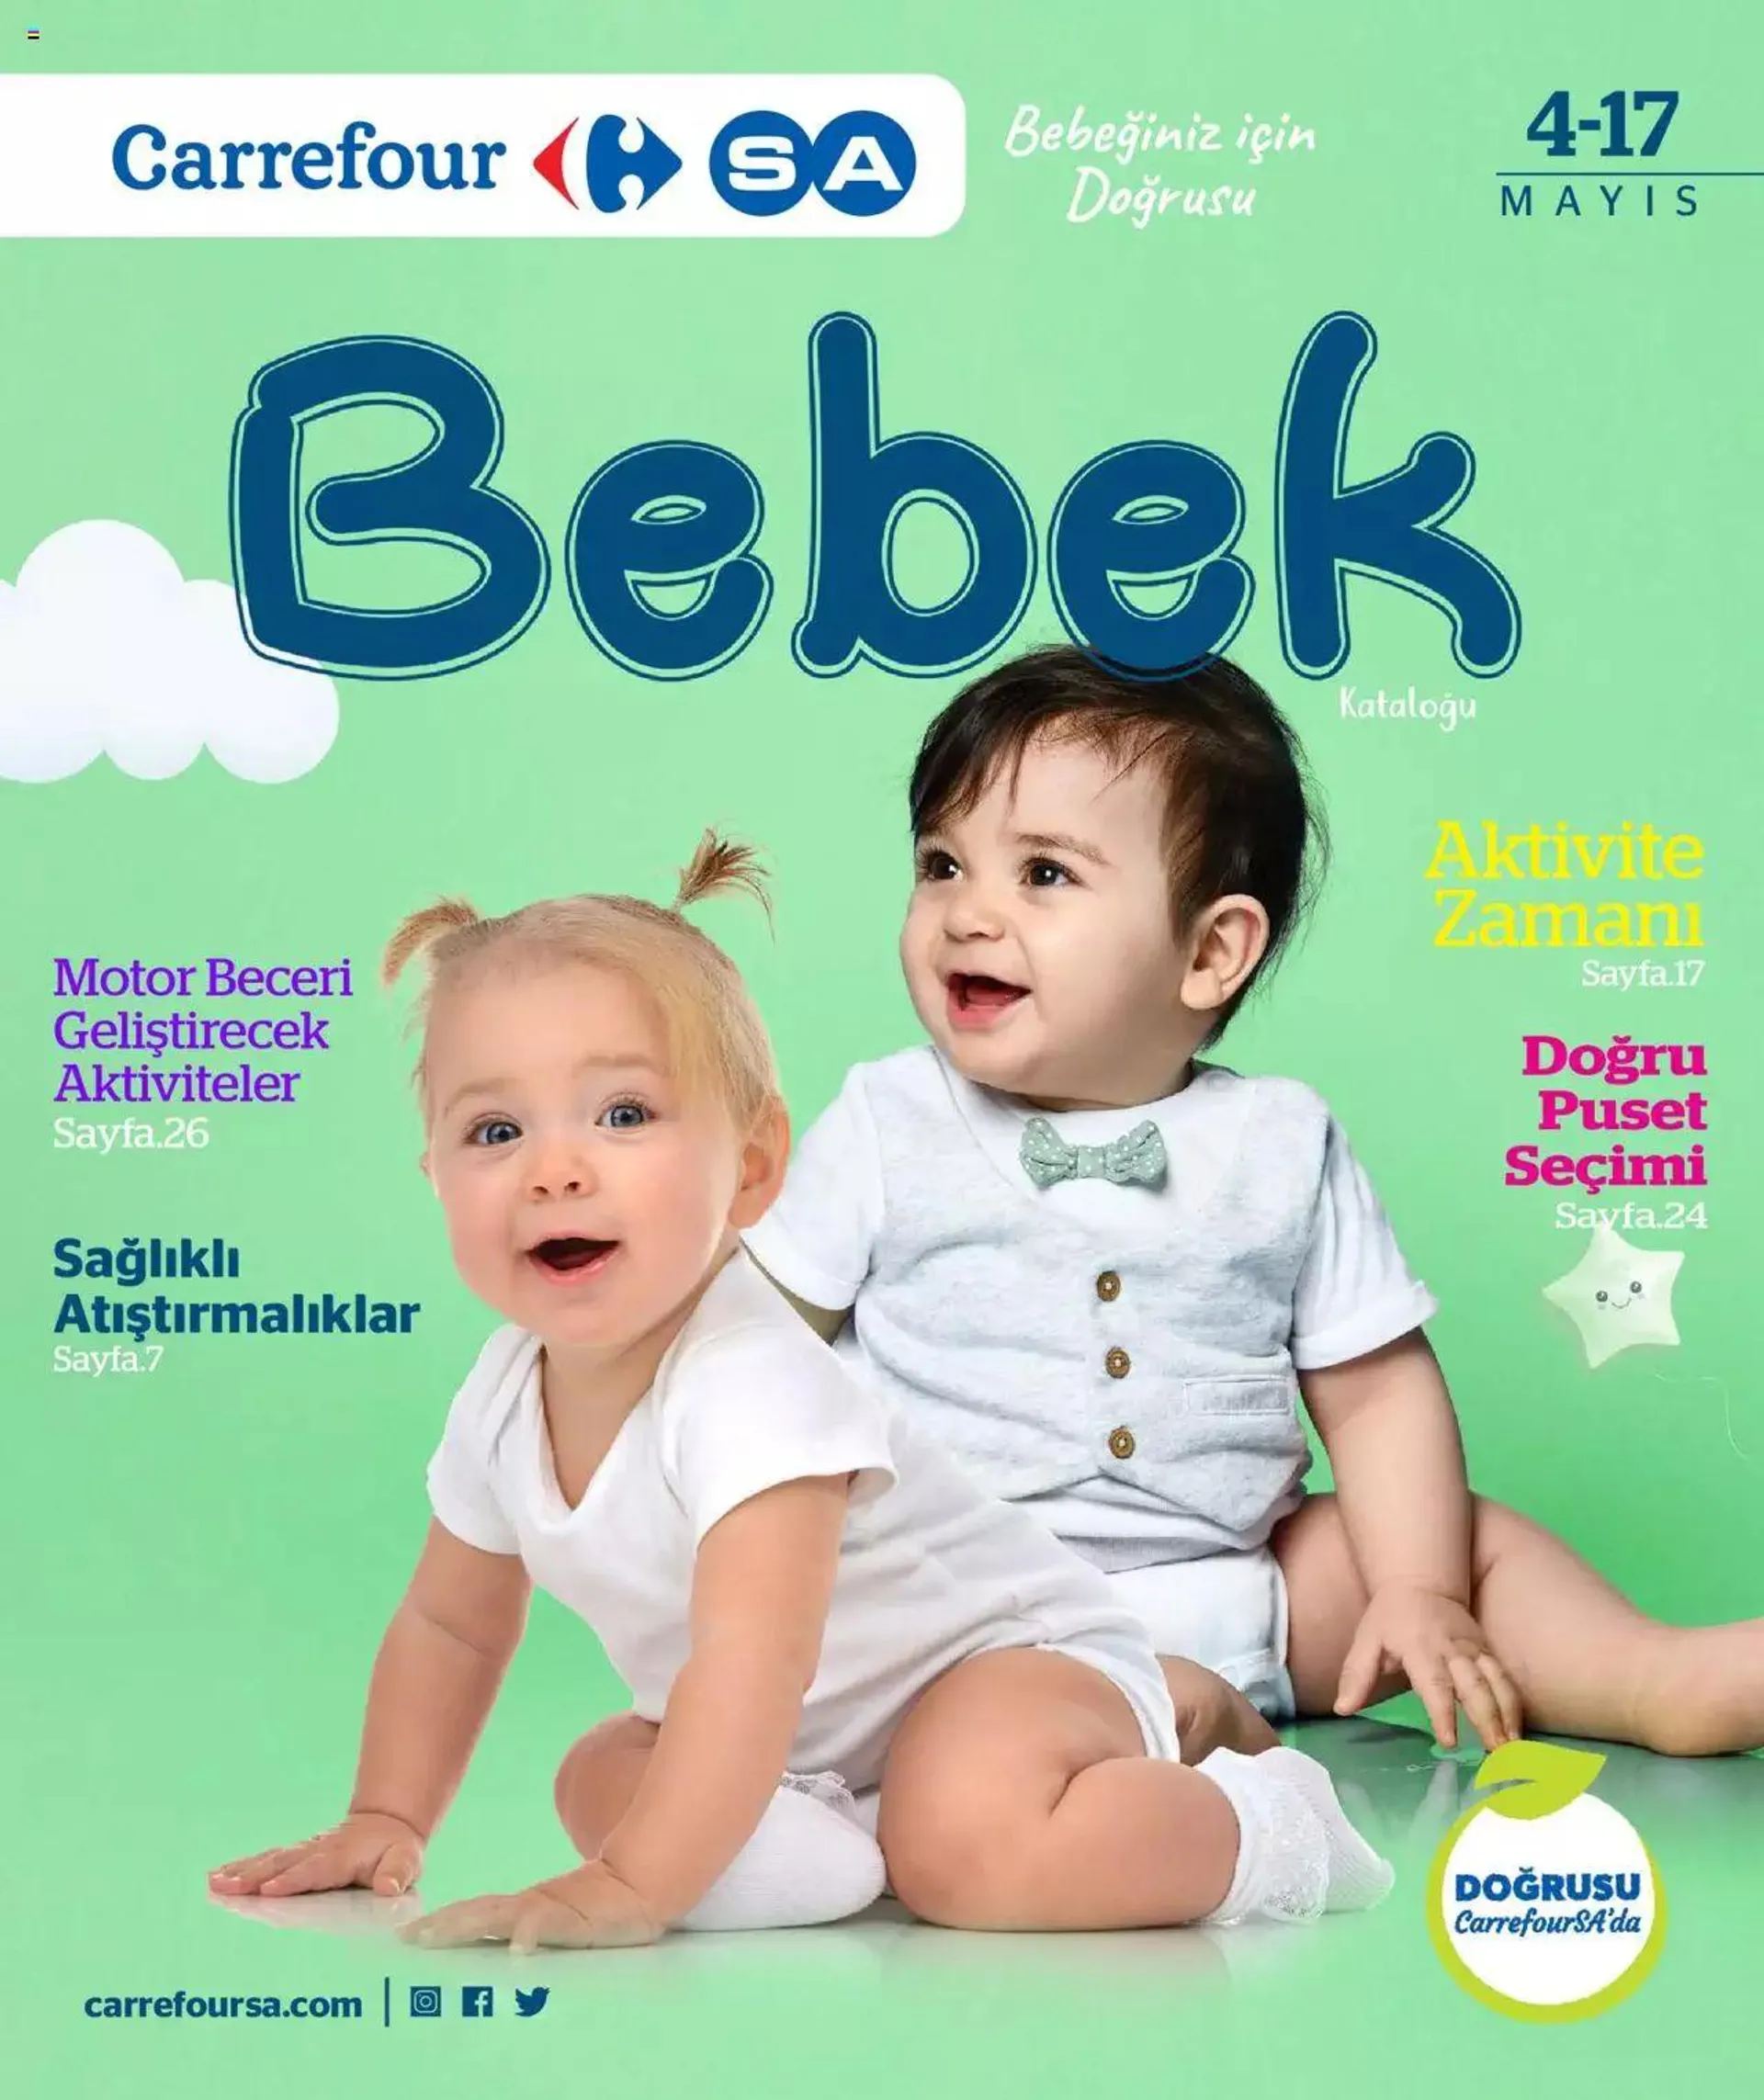 CarrefourSA Katalog - Bebek - 0